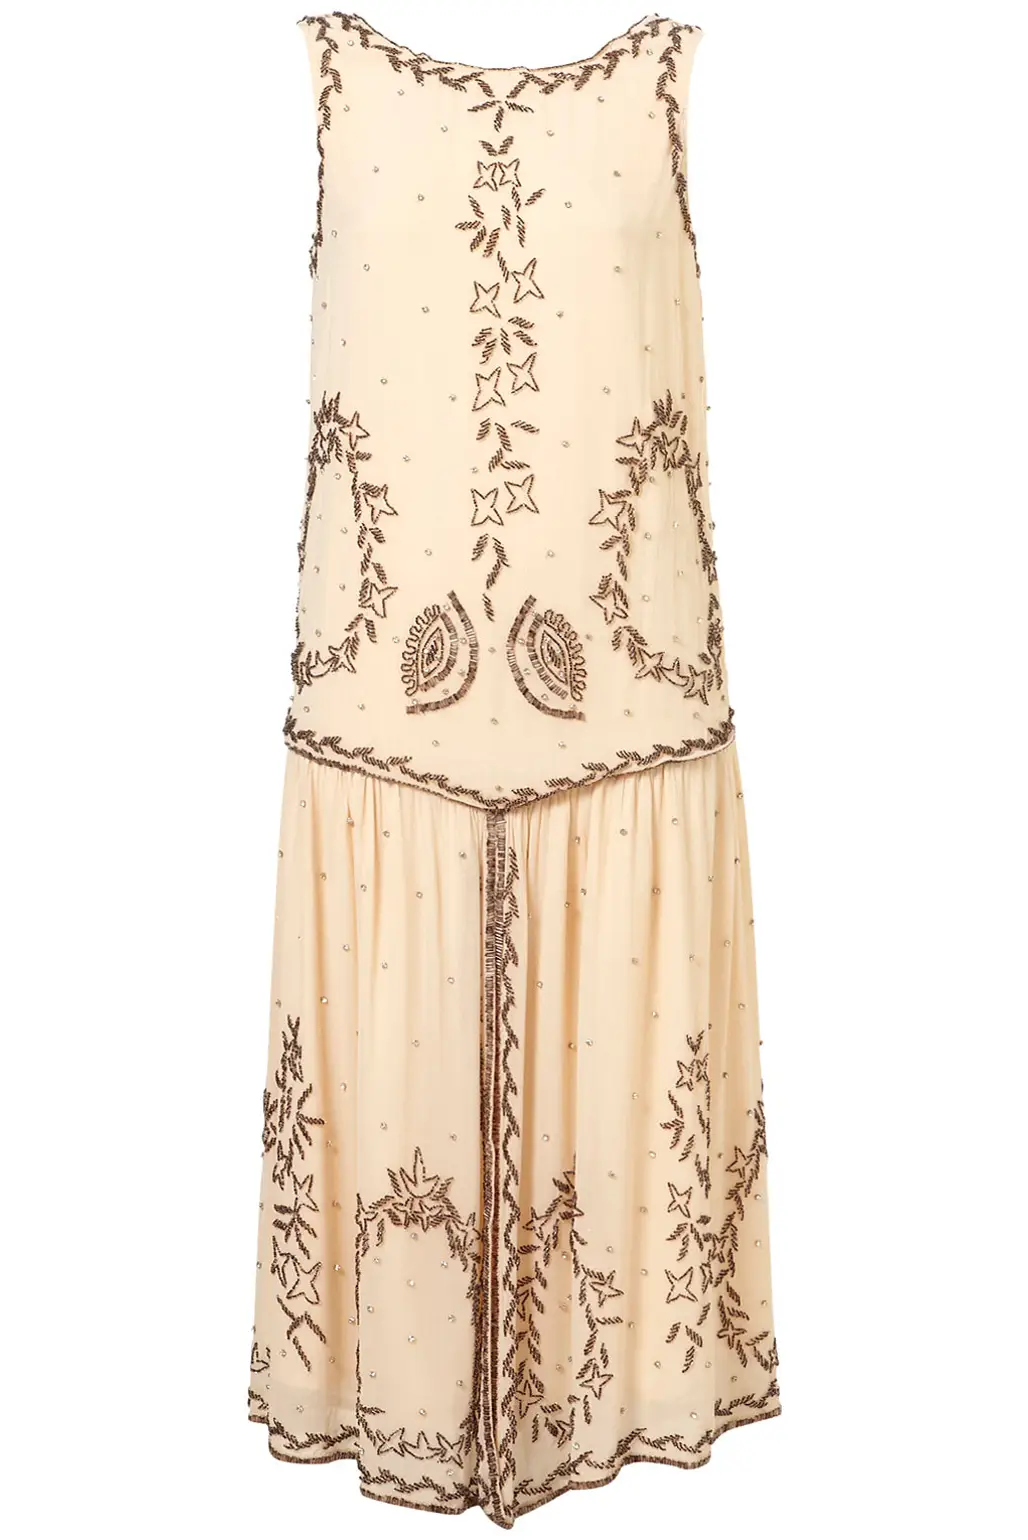 Beaded Art Deco Dress